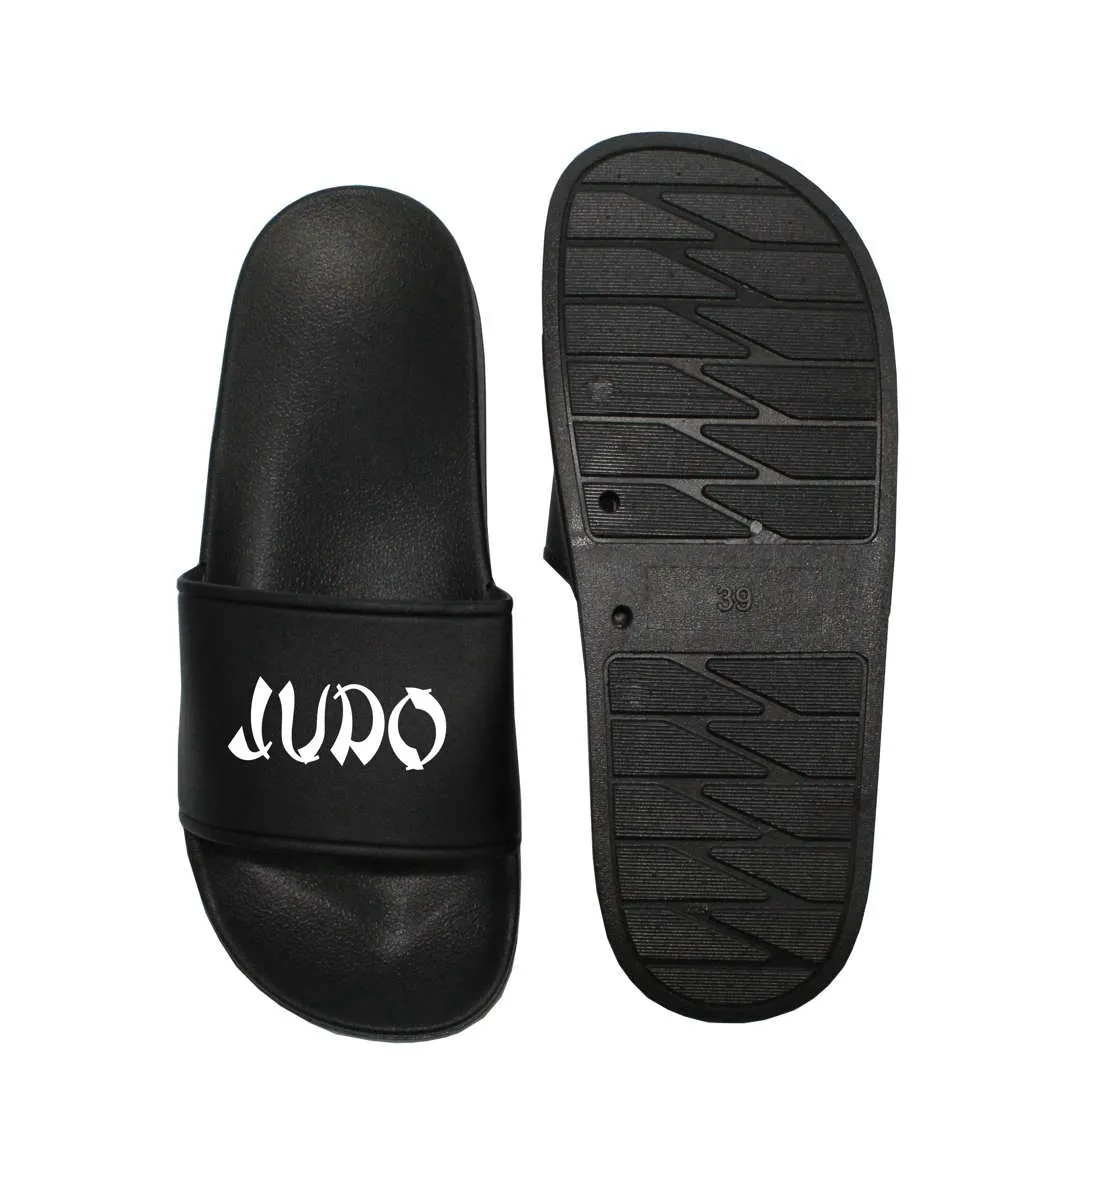 Judo slippers black